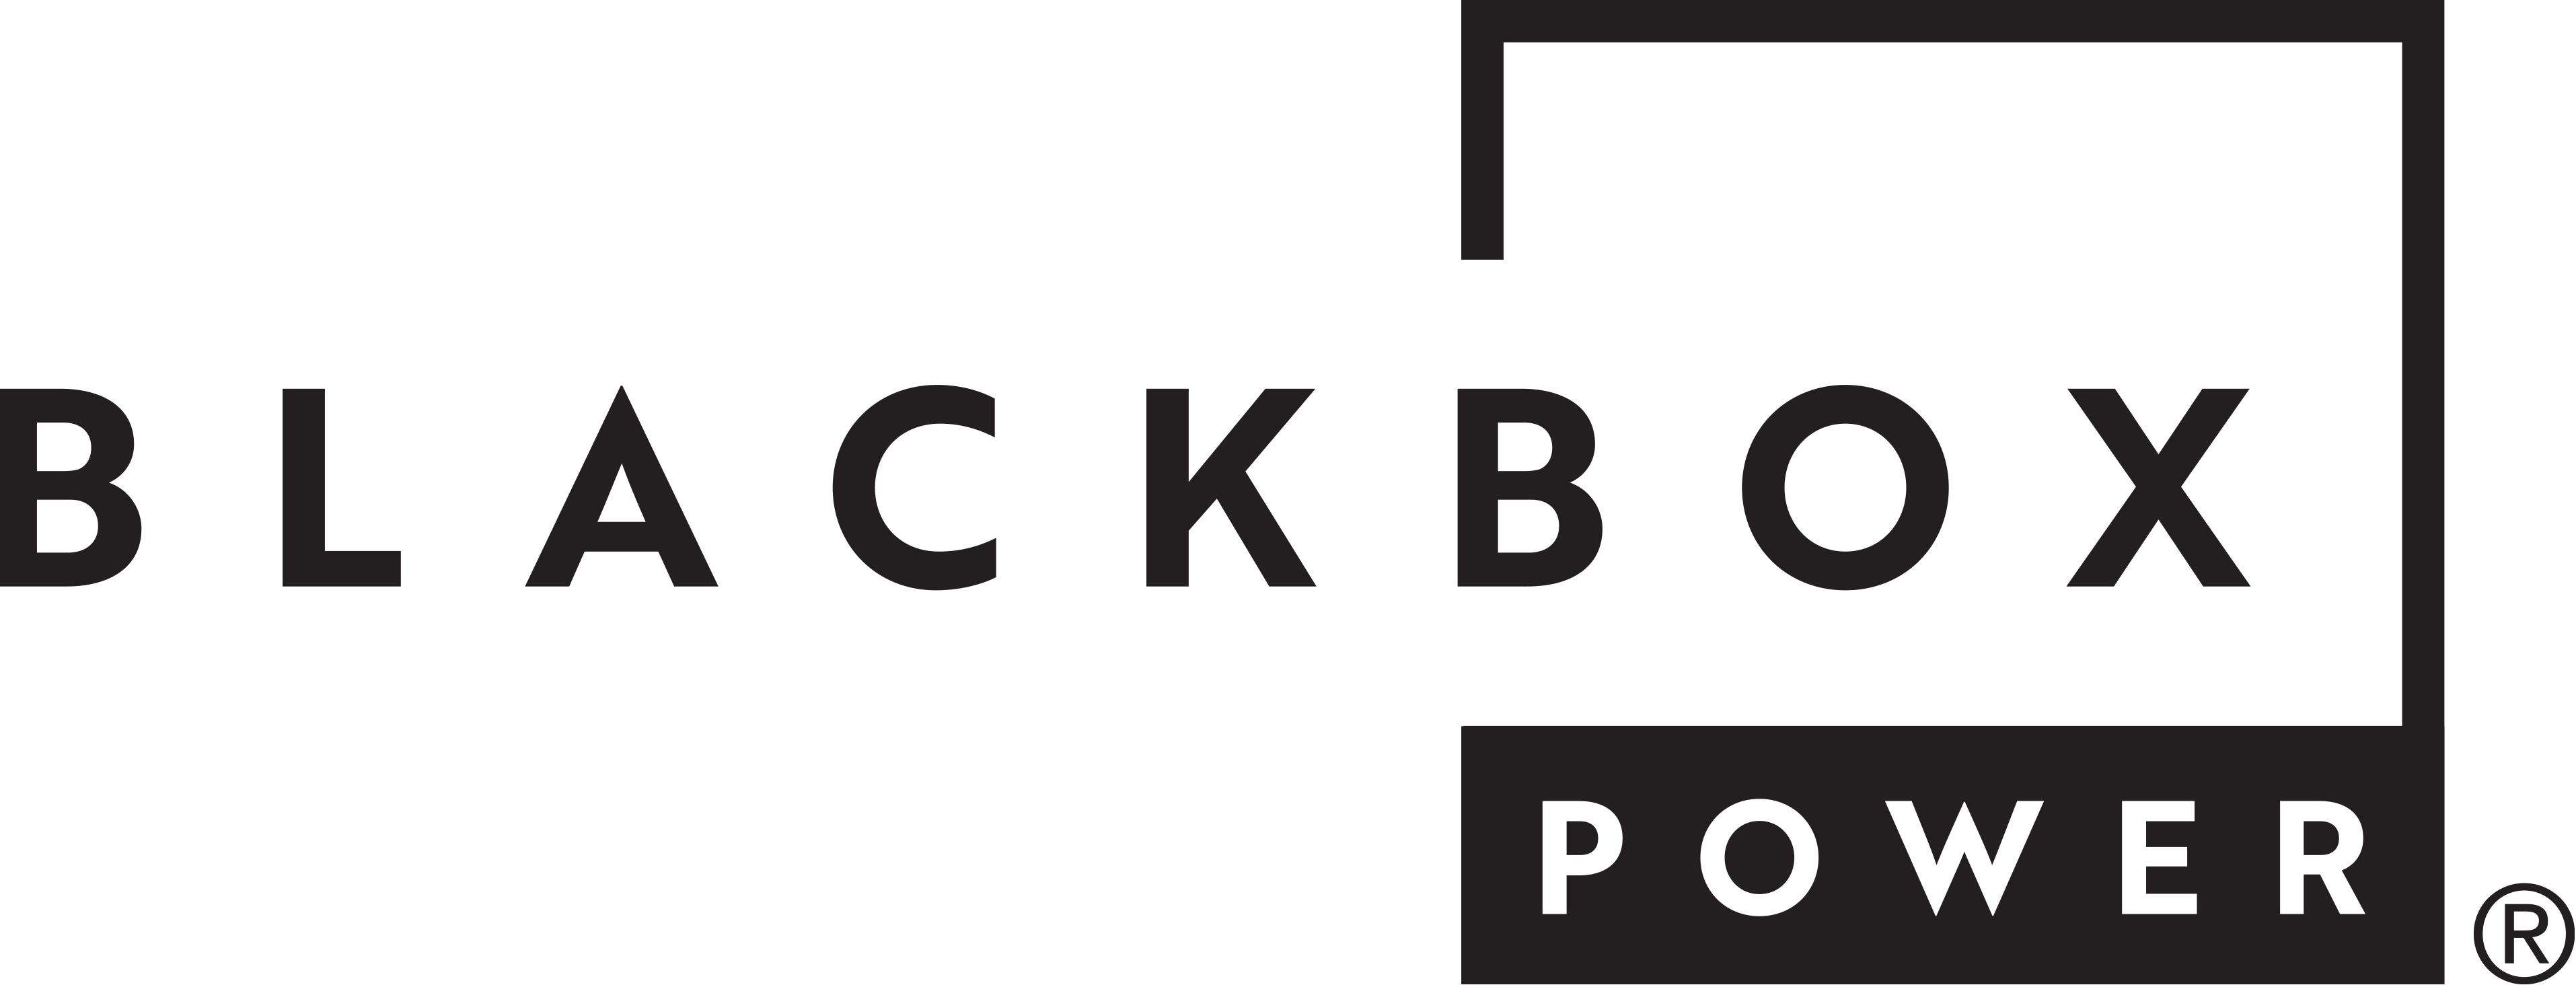 black-box-power-logo.png